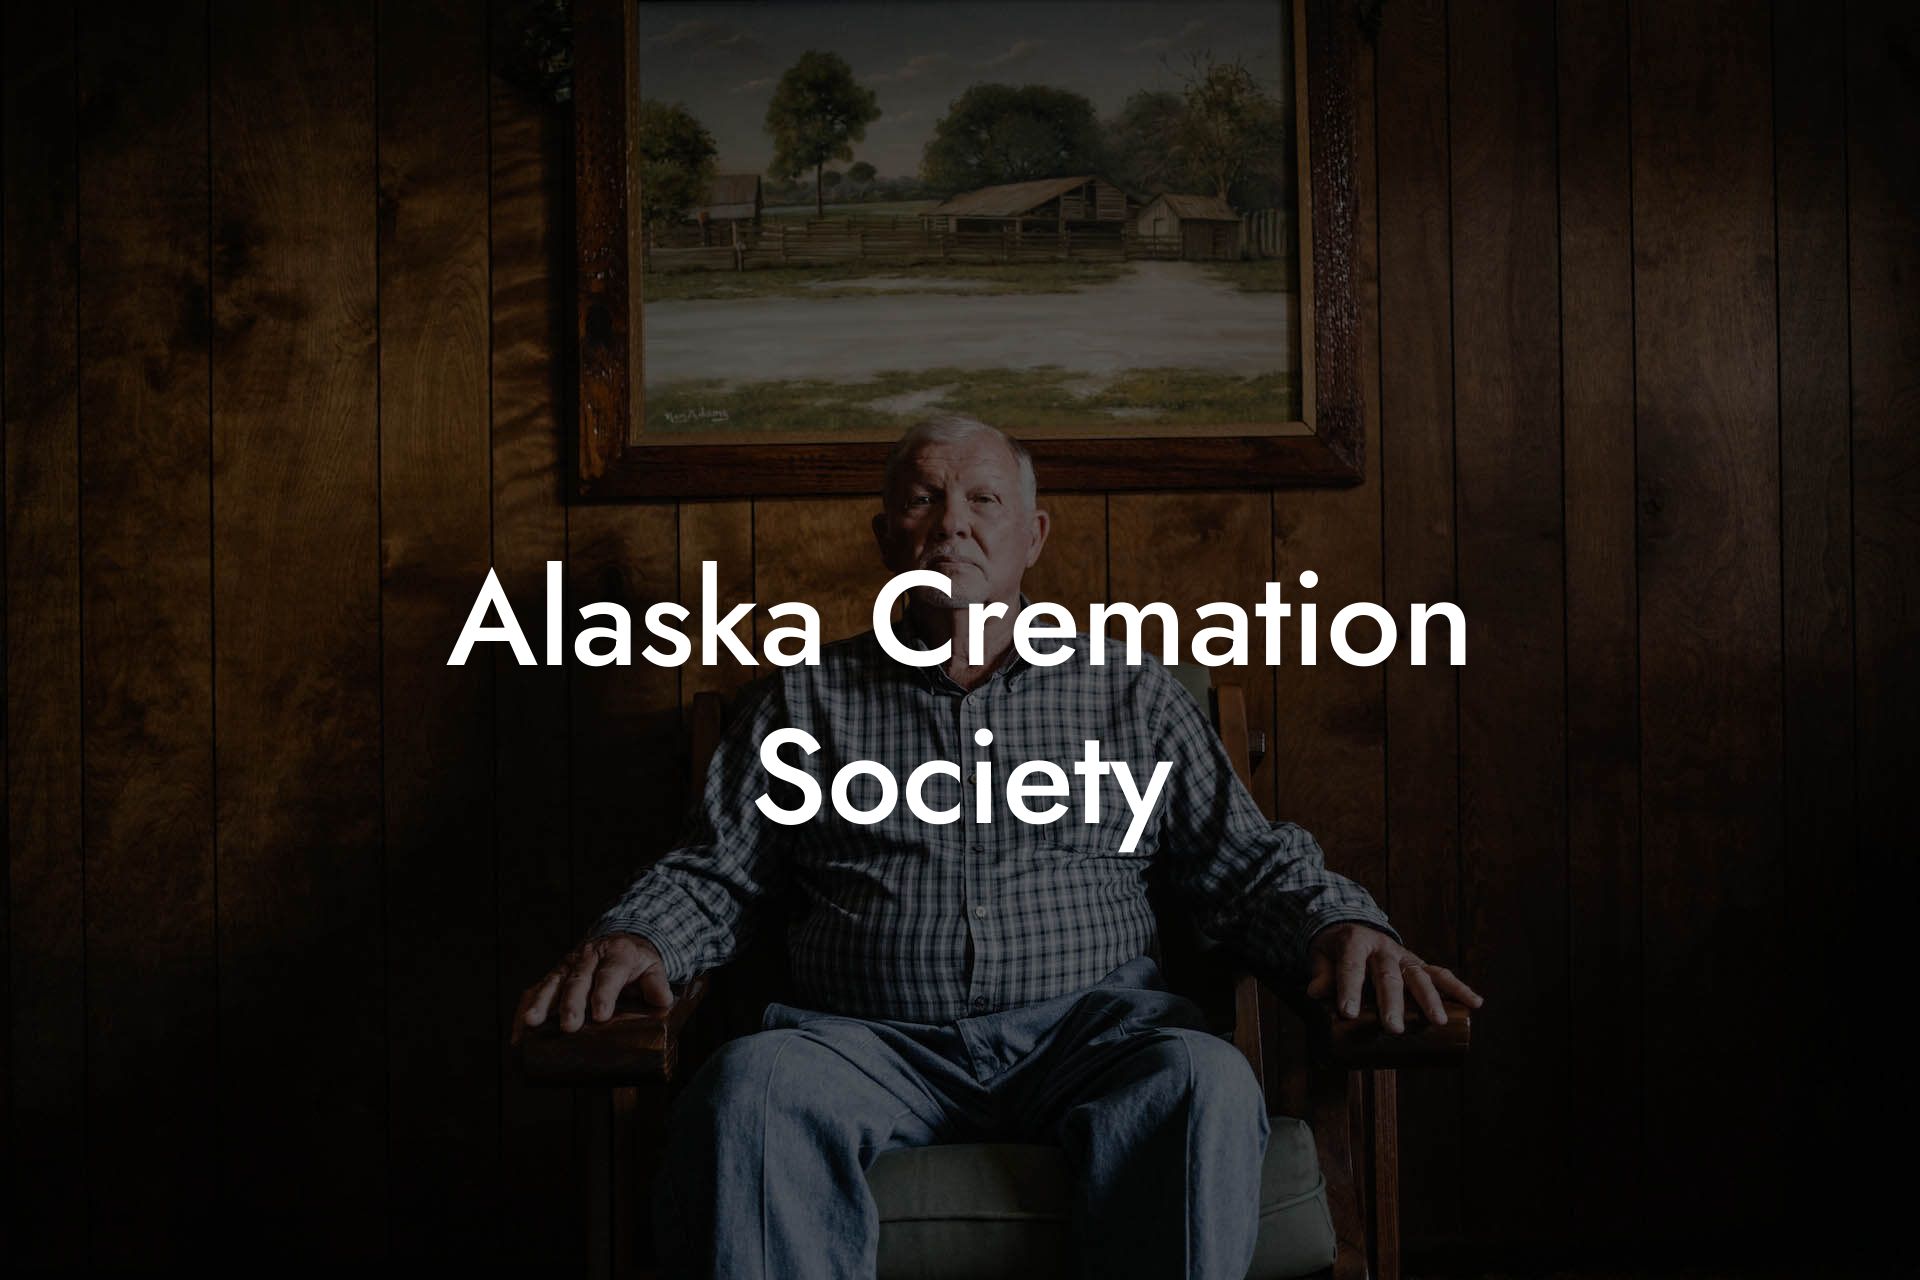 Alaska Cremation Society